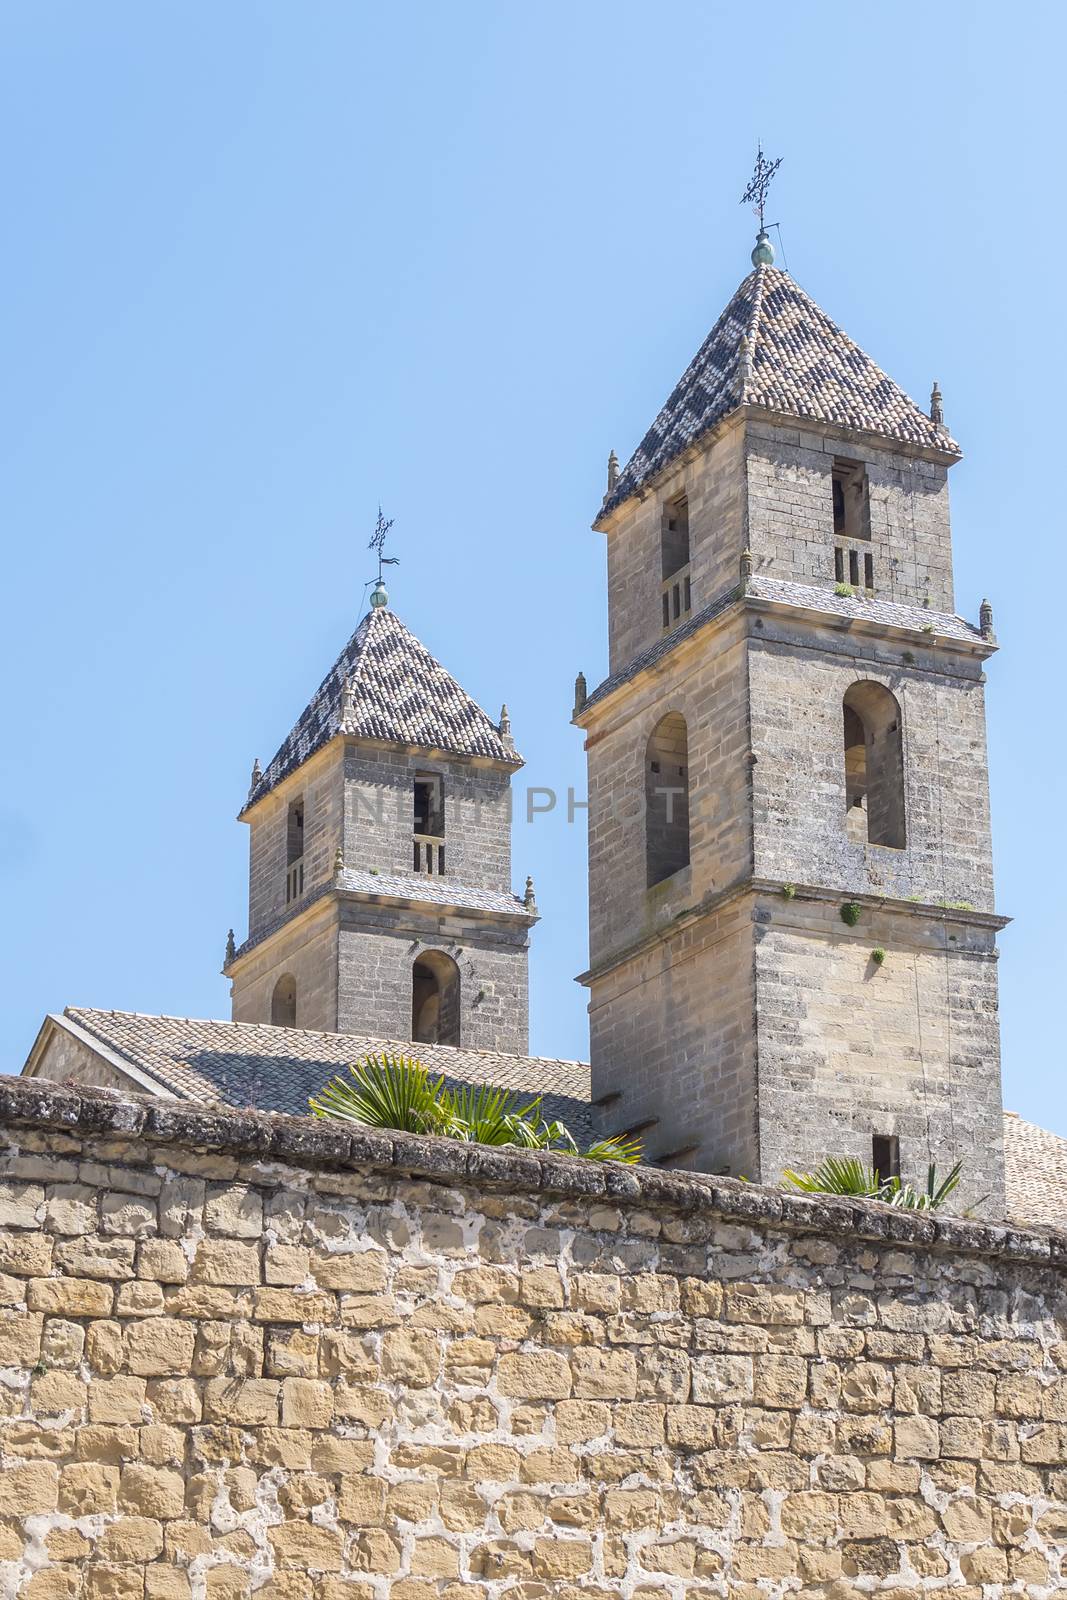 Two towers of the Hospital de Santiago, Ubeda, Jaen, Spain